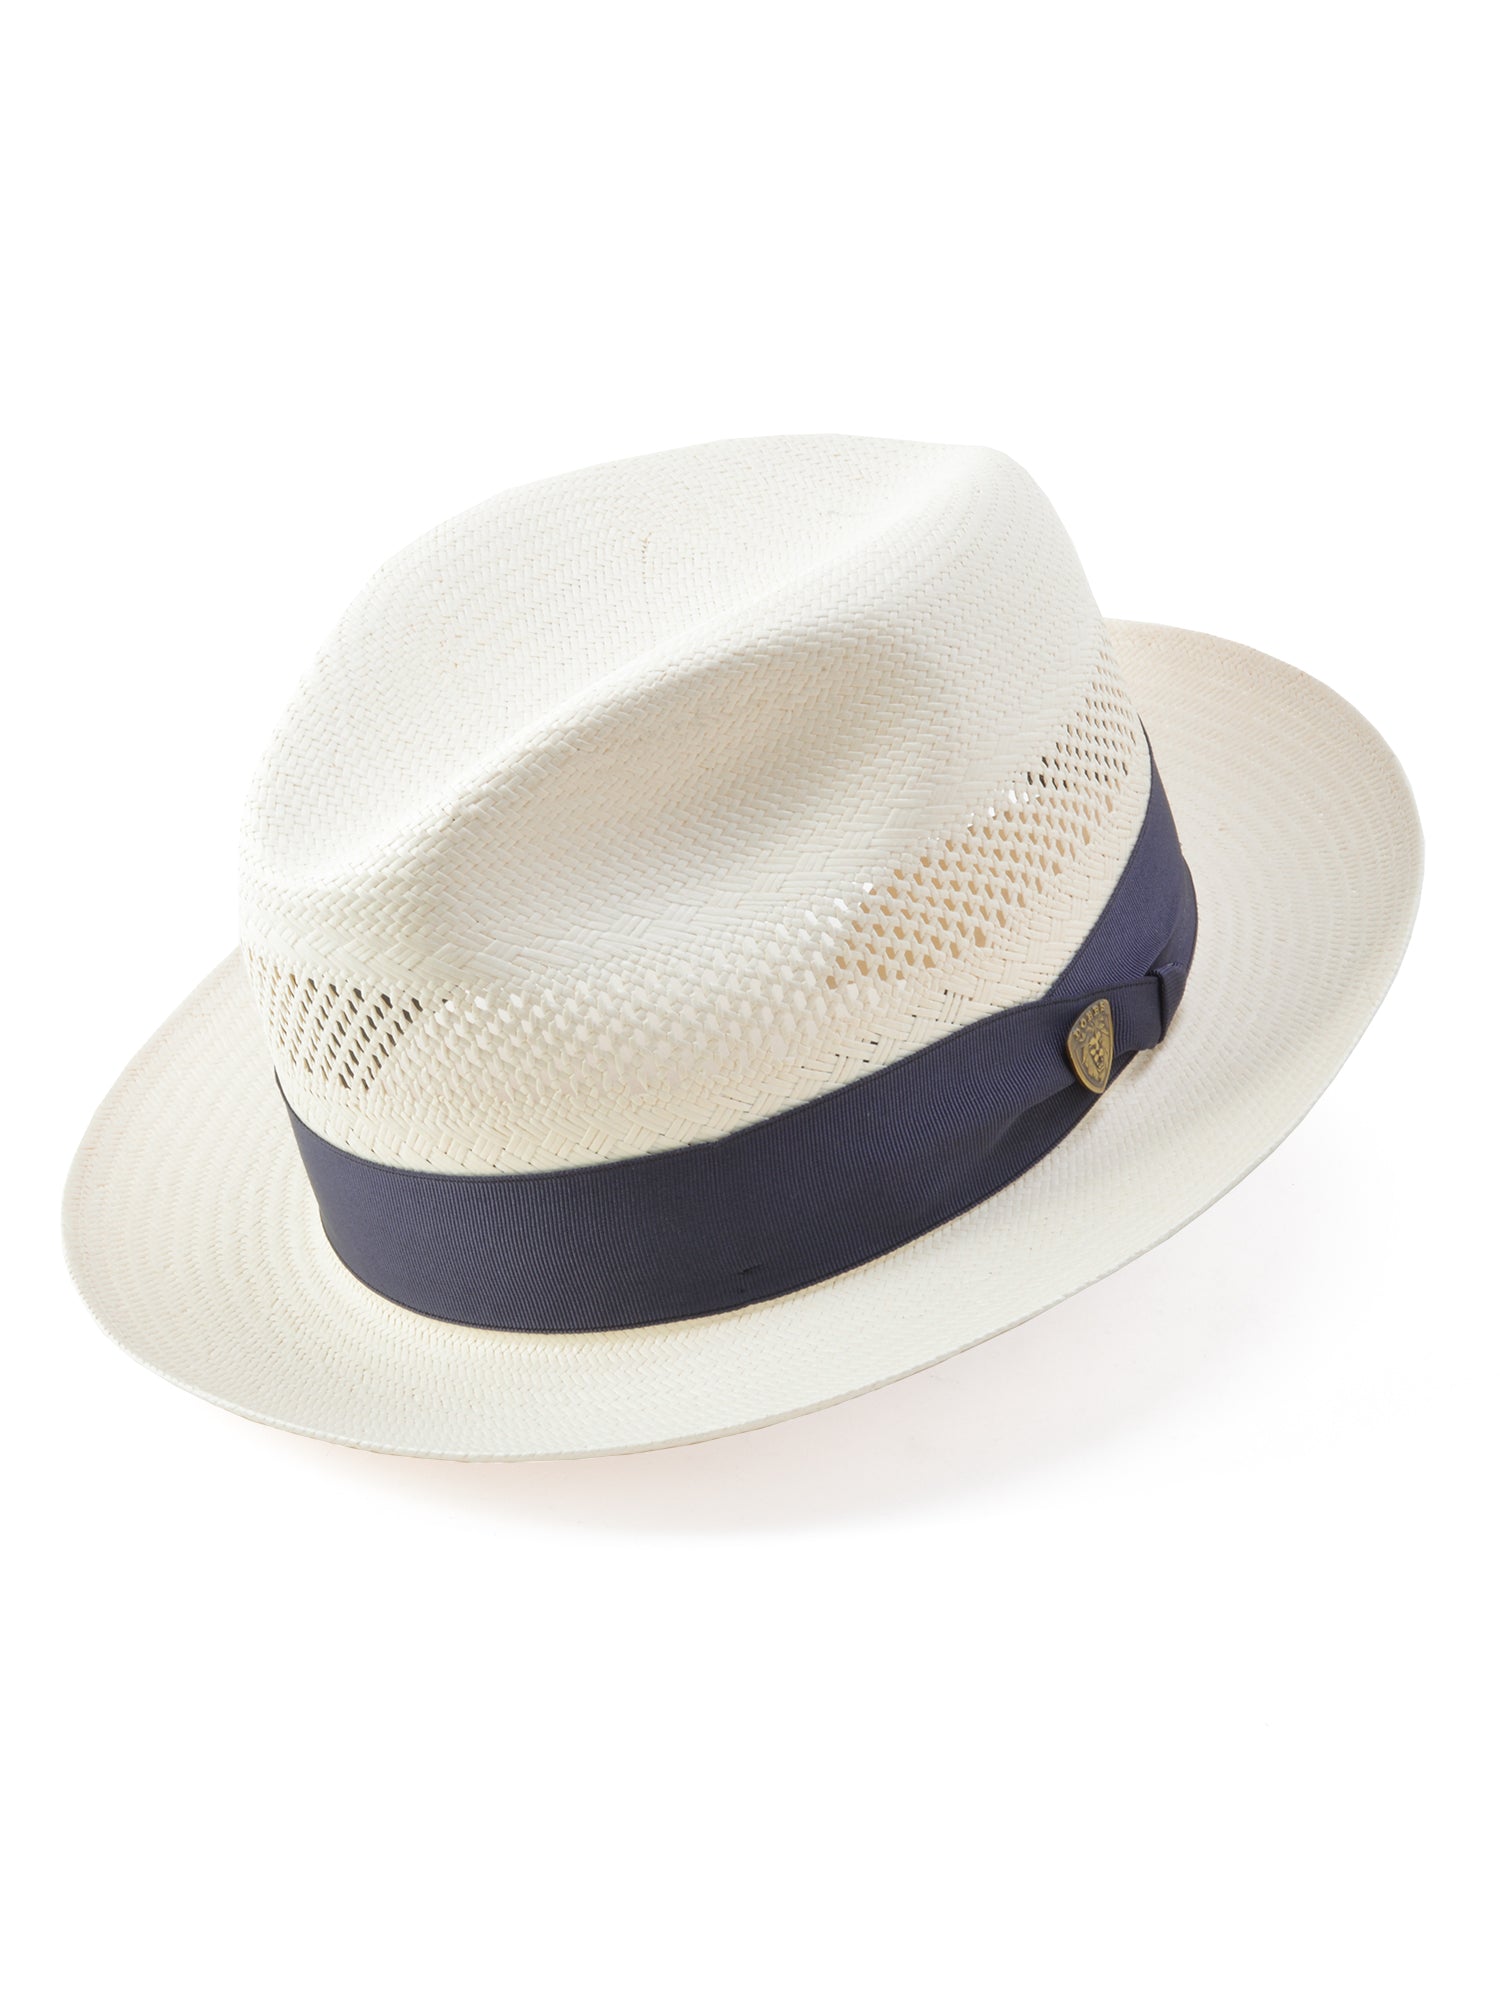 Dobbs Vented Center Dent Shantung Panama Straw Hat